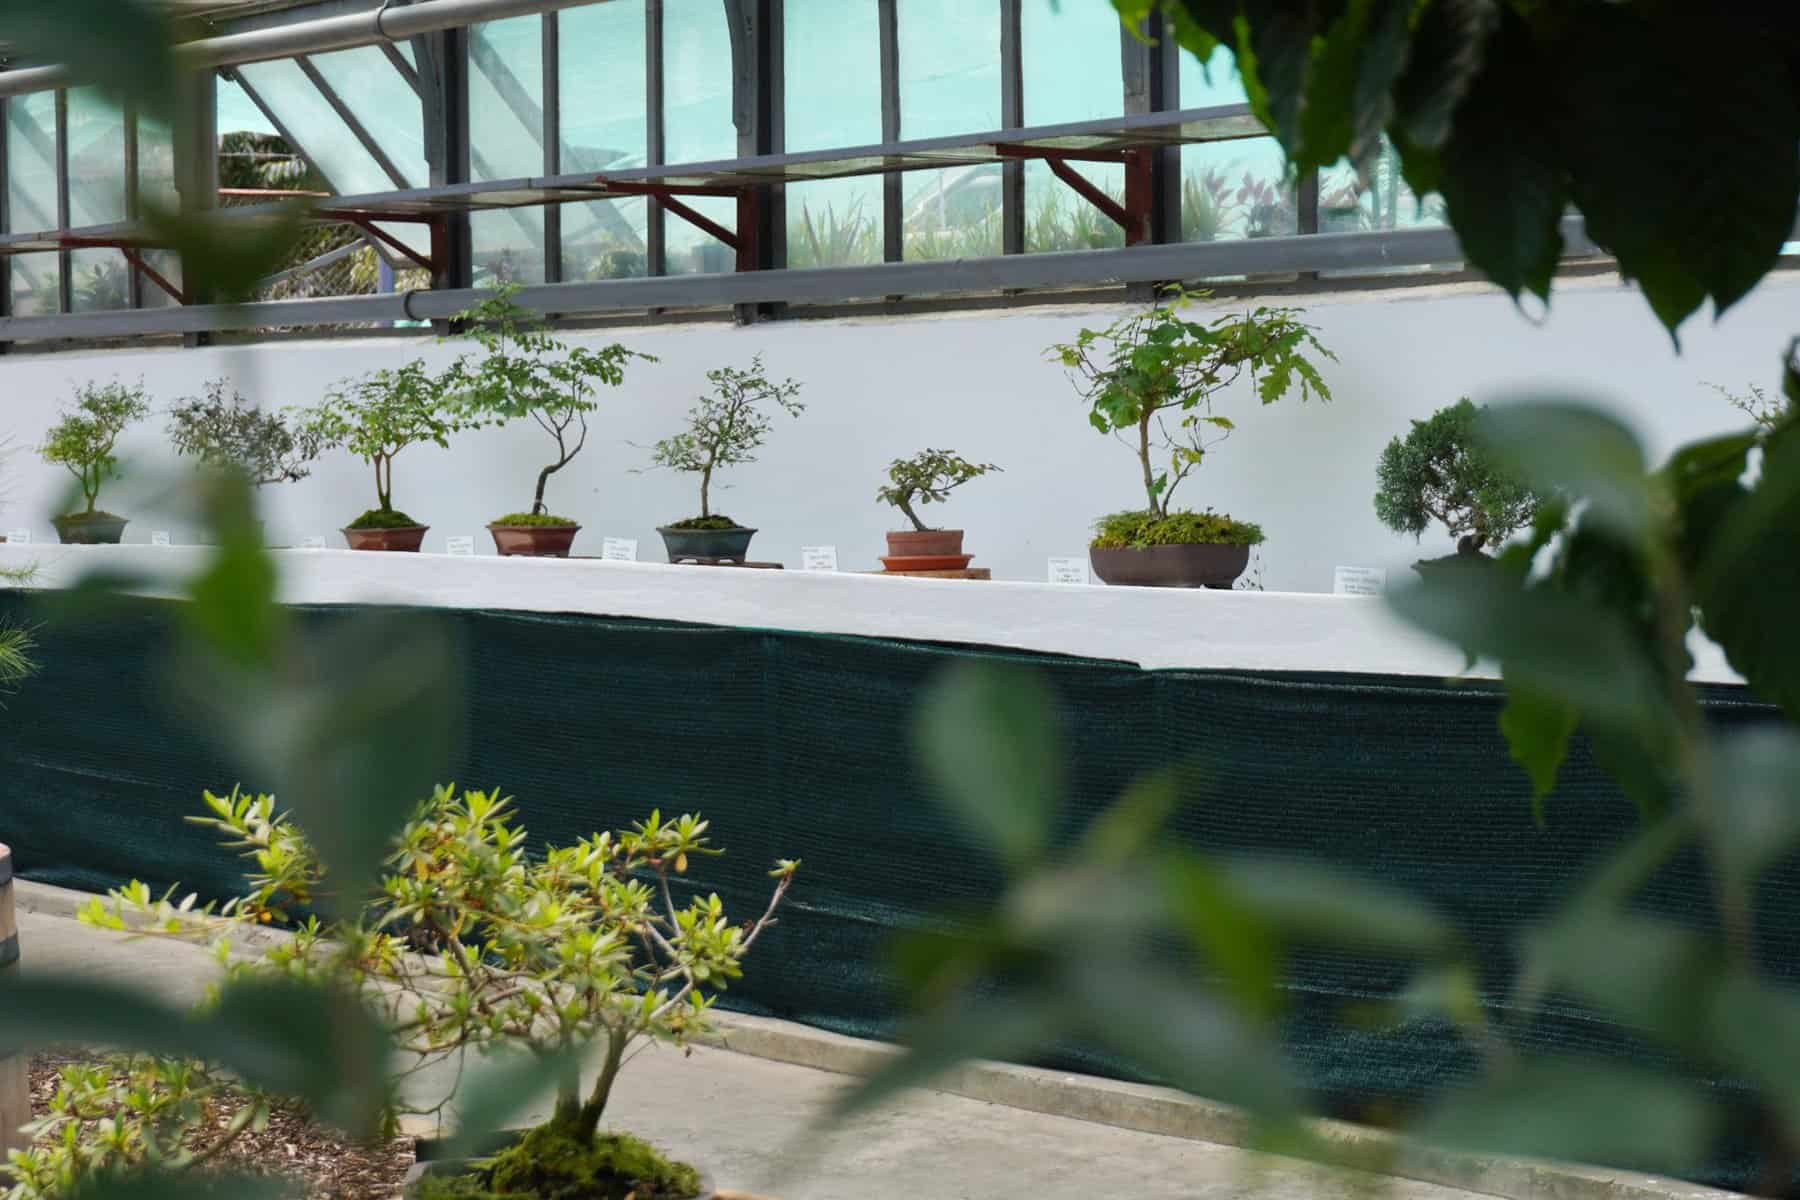 bonsai gradina botanica (5)